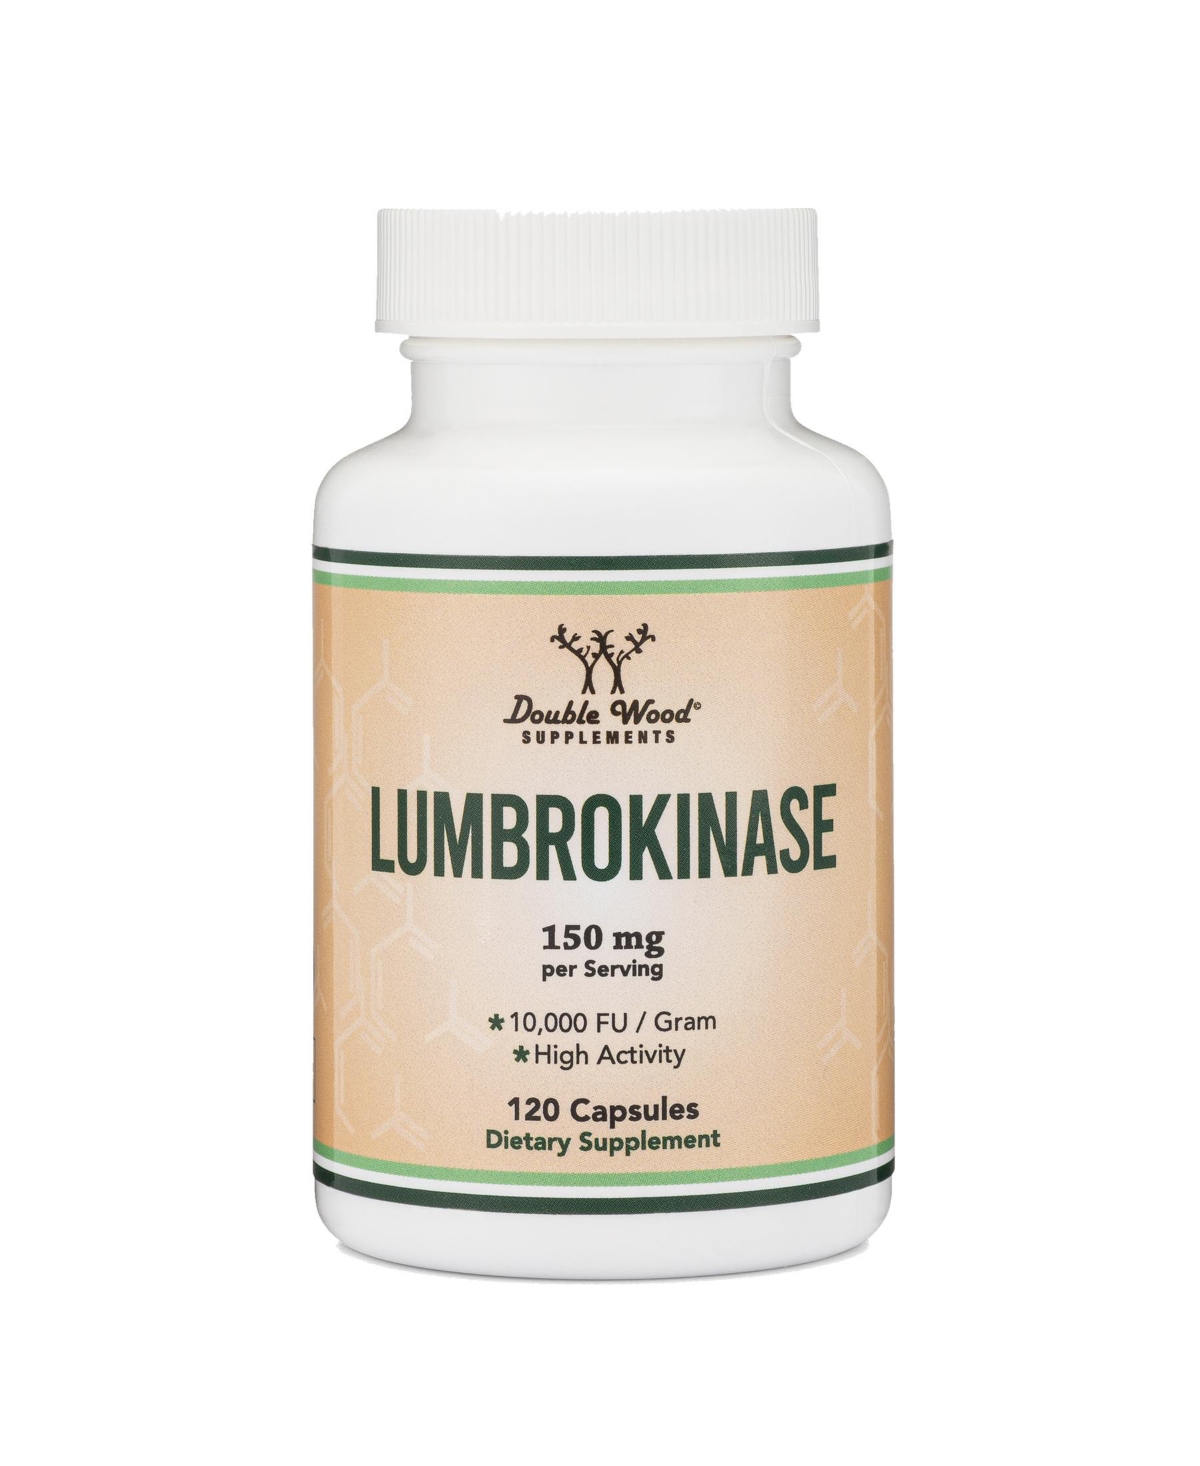 Lumbrokinase - 120 capsules, 150 mg servings